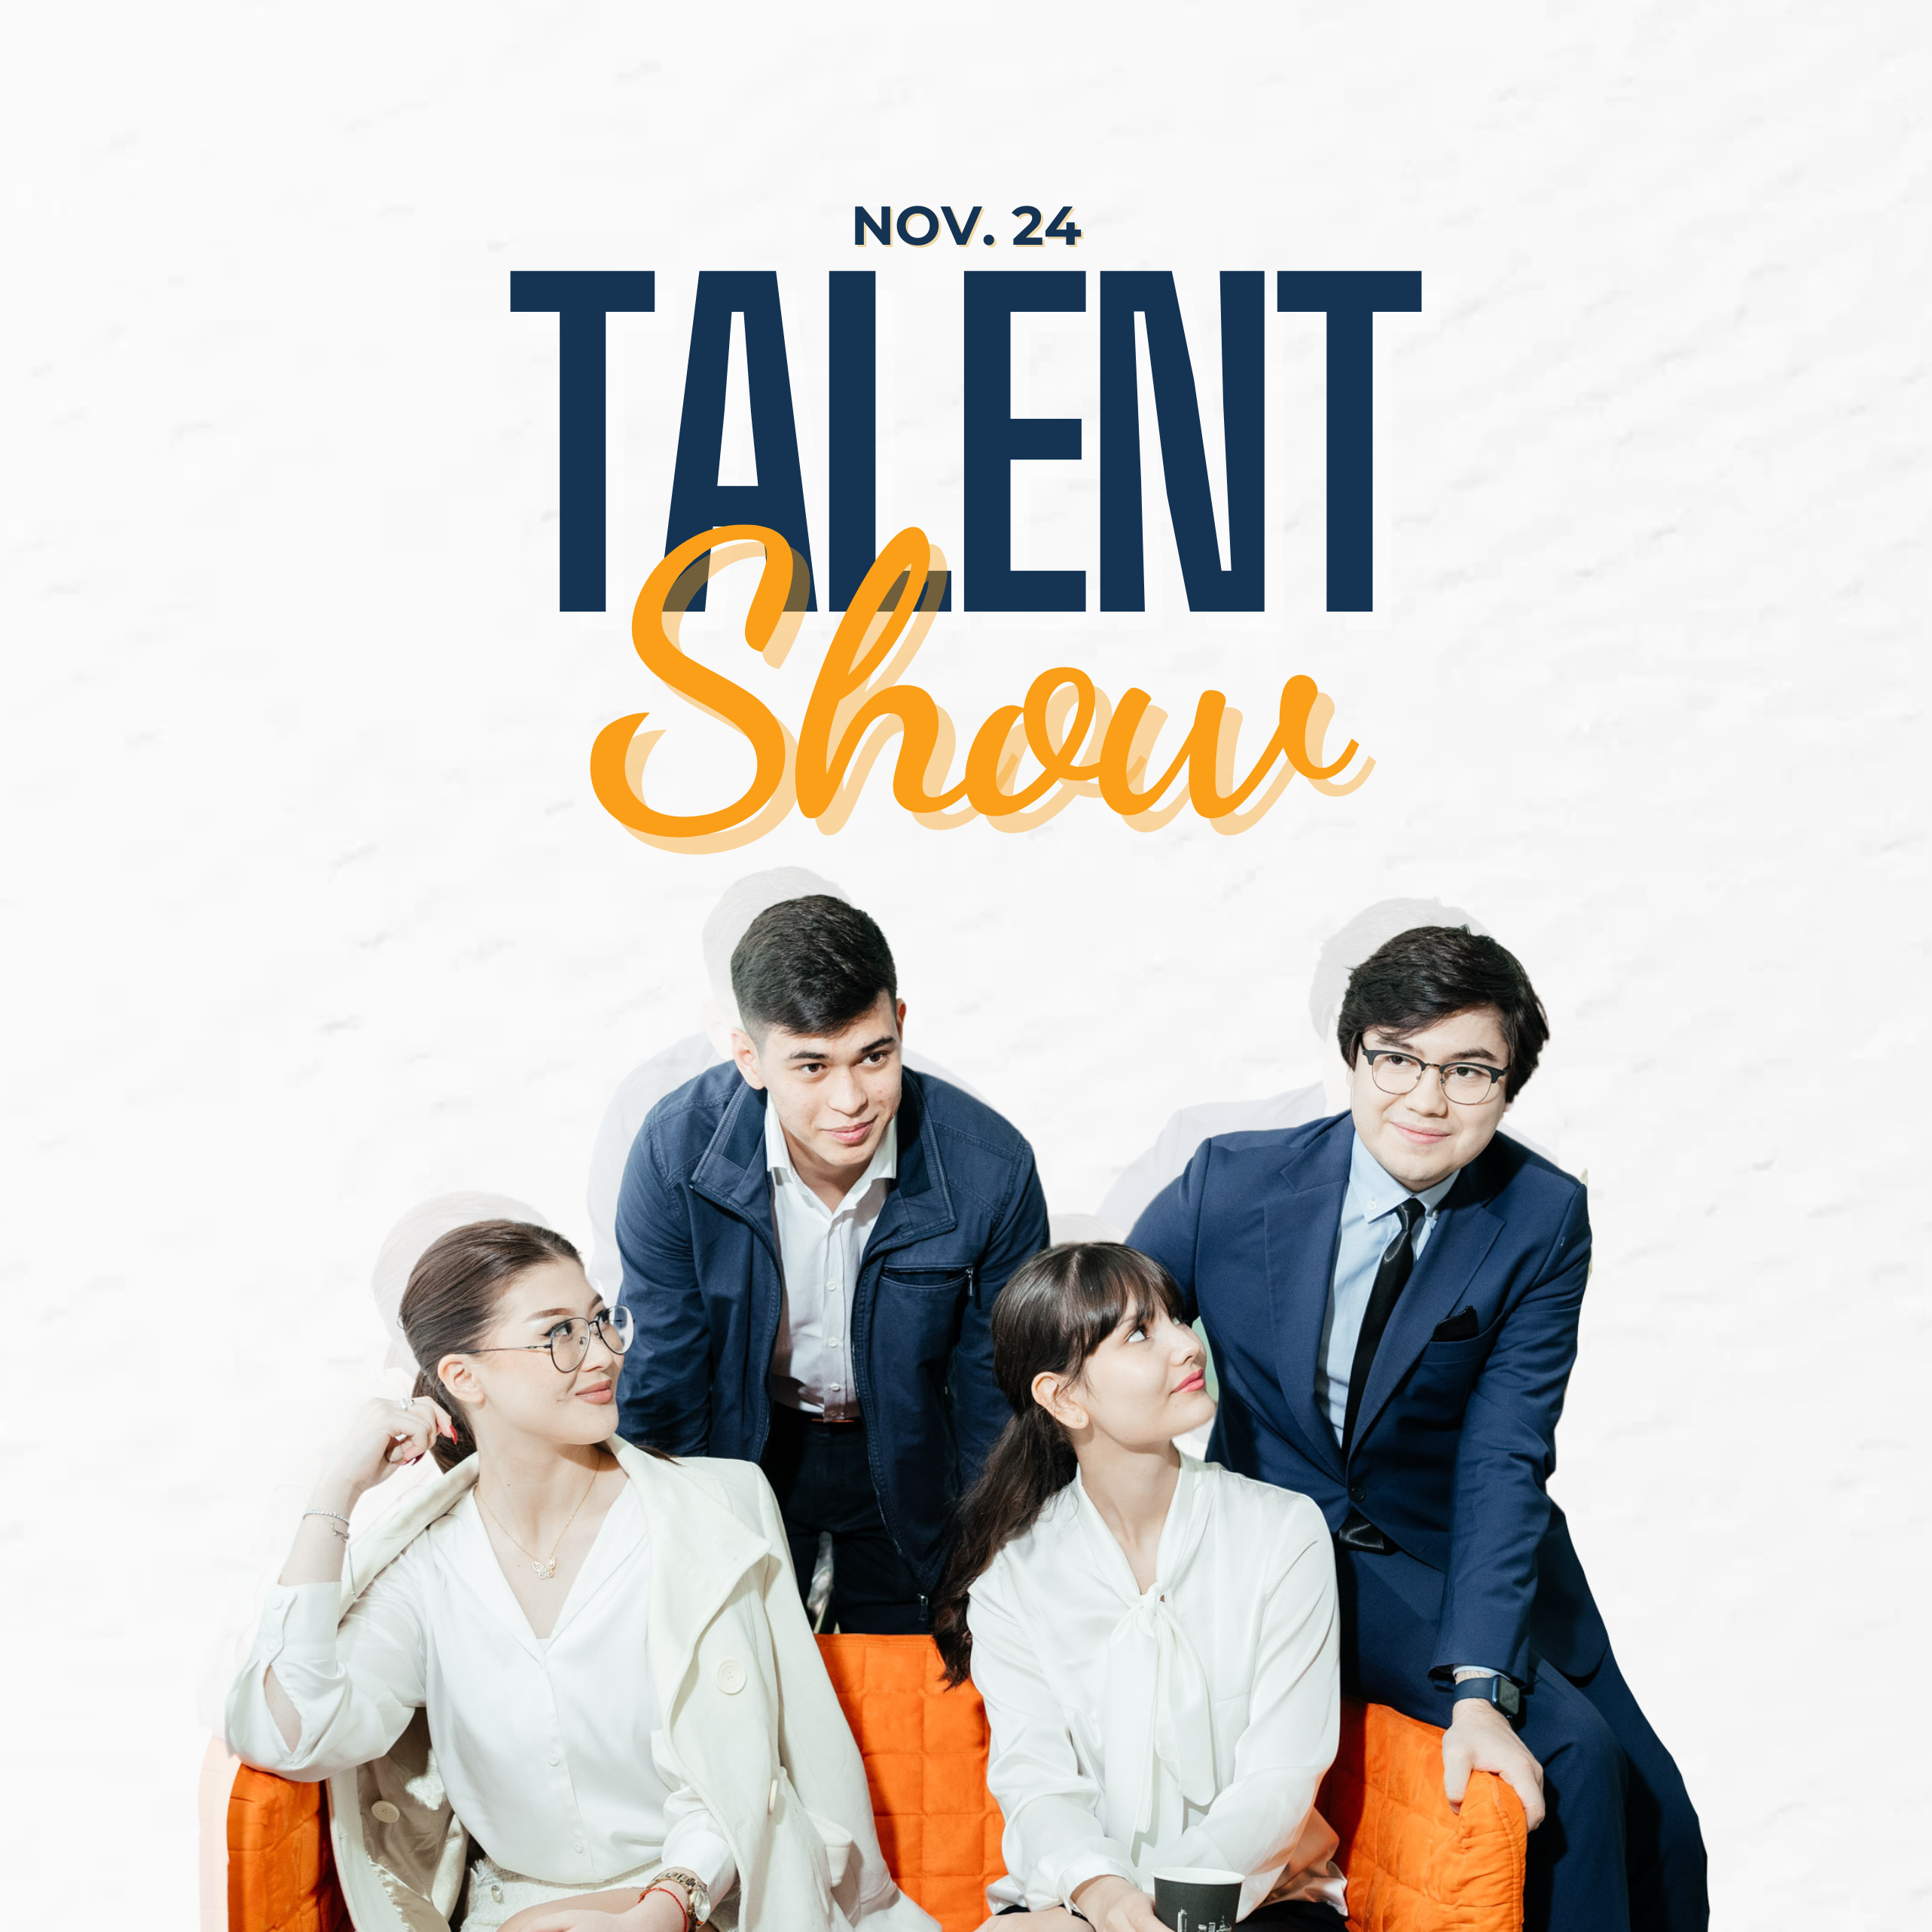 "Talent show"